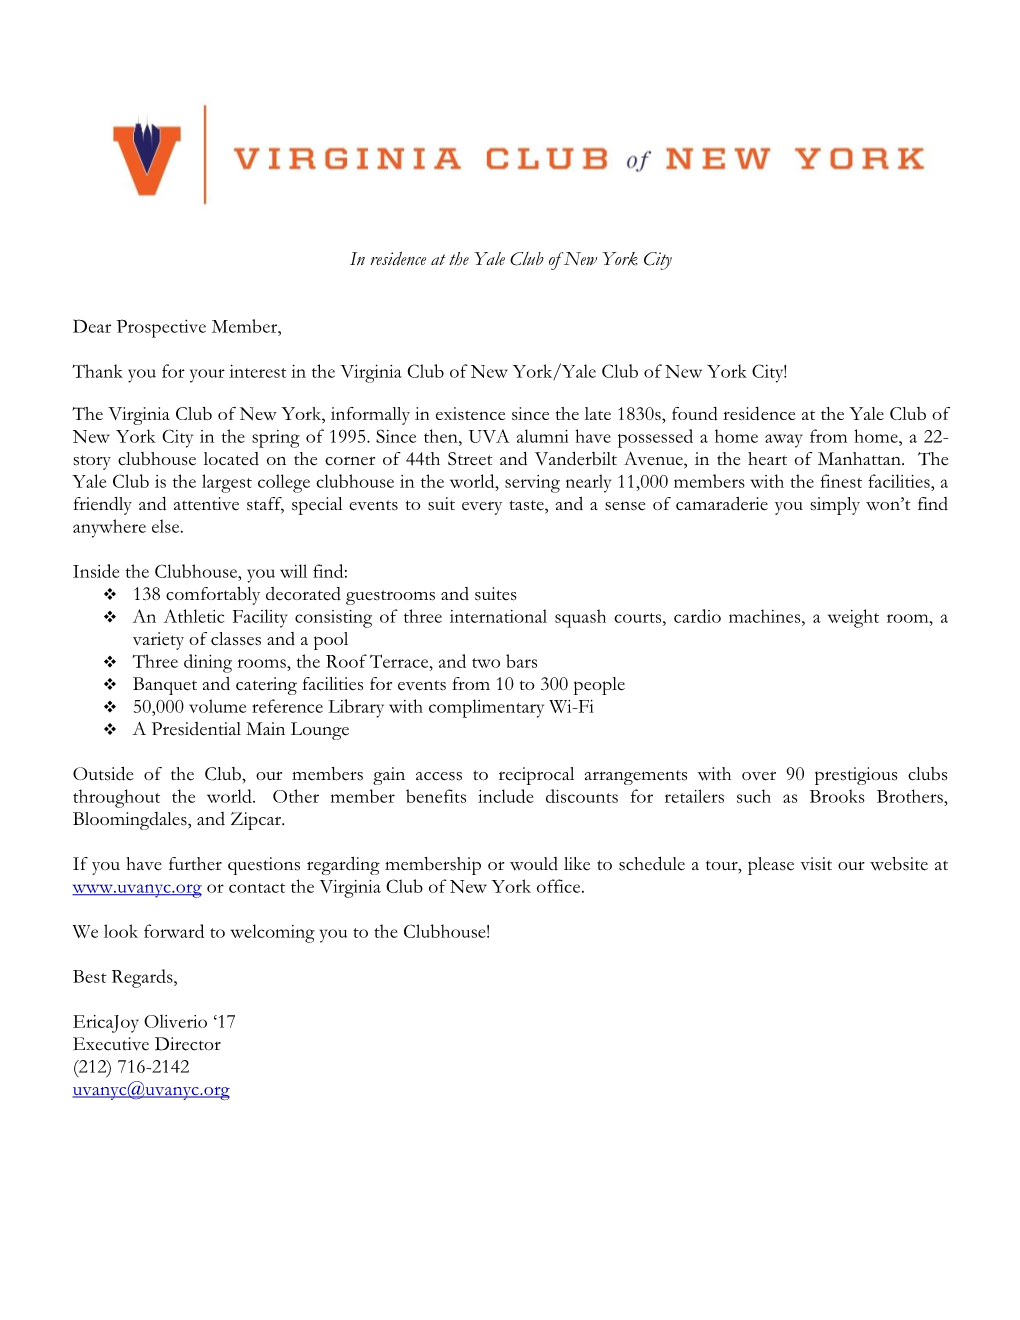 Virginia Club of New York/Yale Club of New York City!